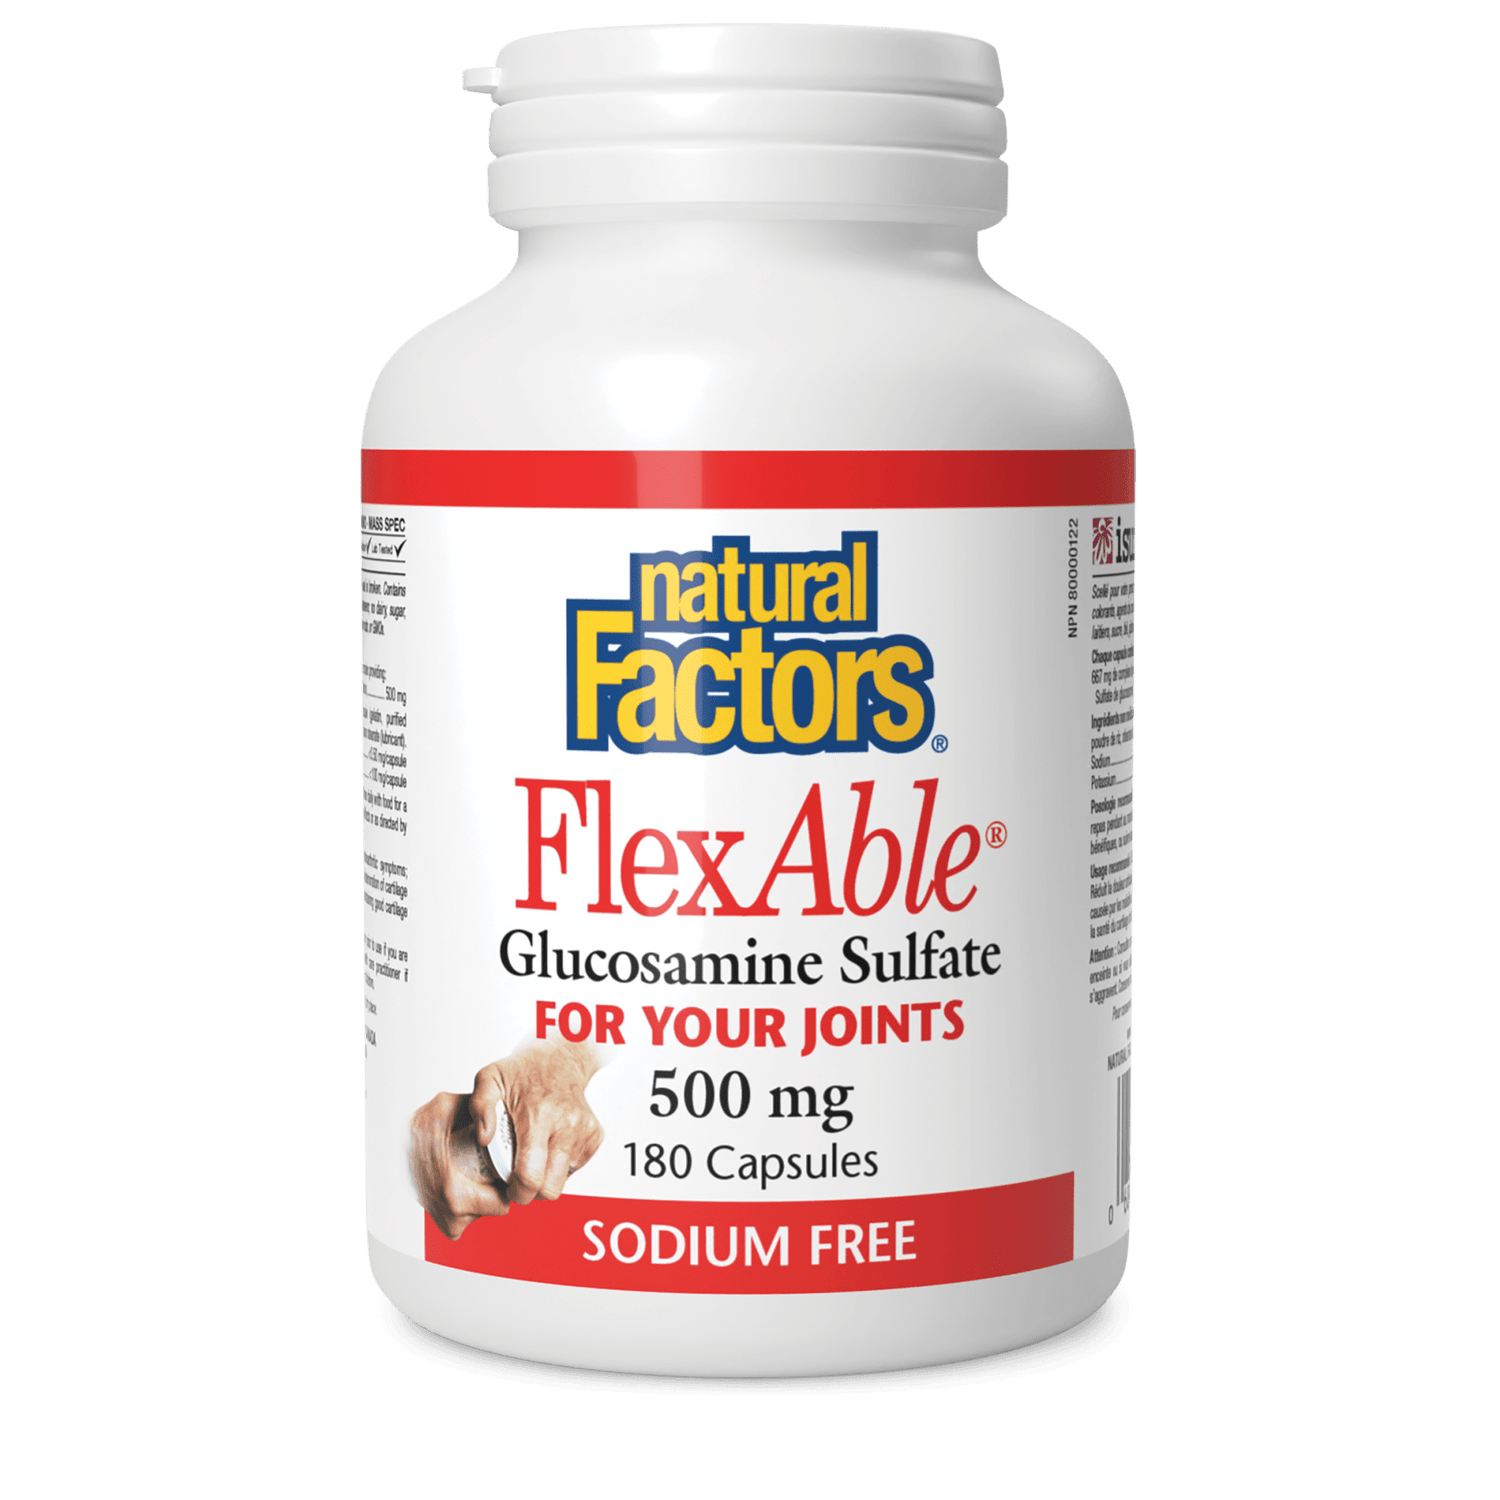 FlexAble Glucosamine Sulfate 500 mg, Natural Factors|v|image|2659